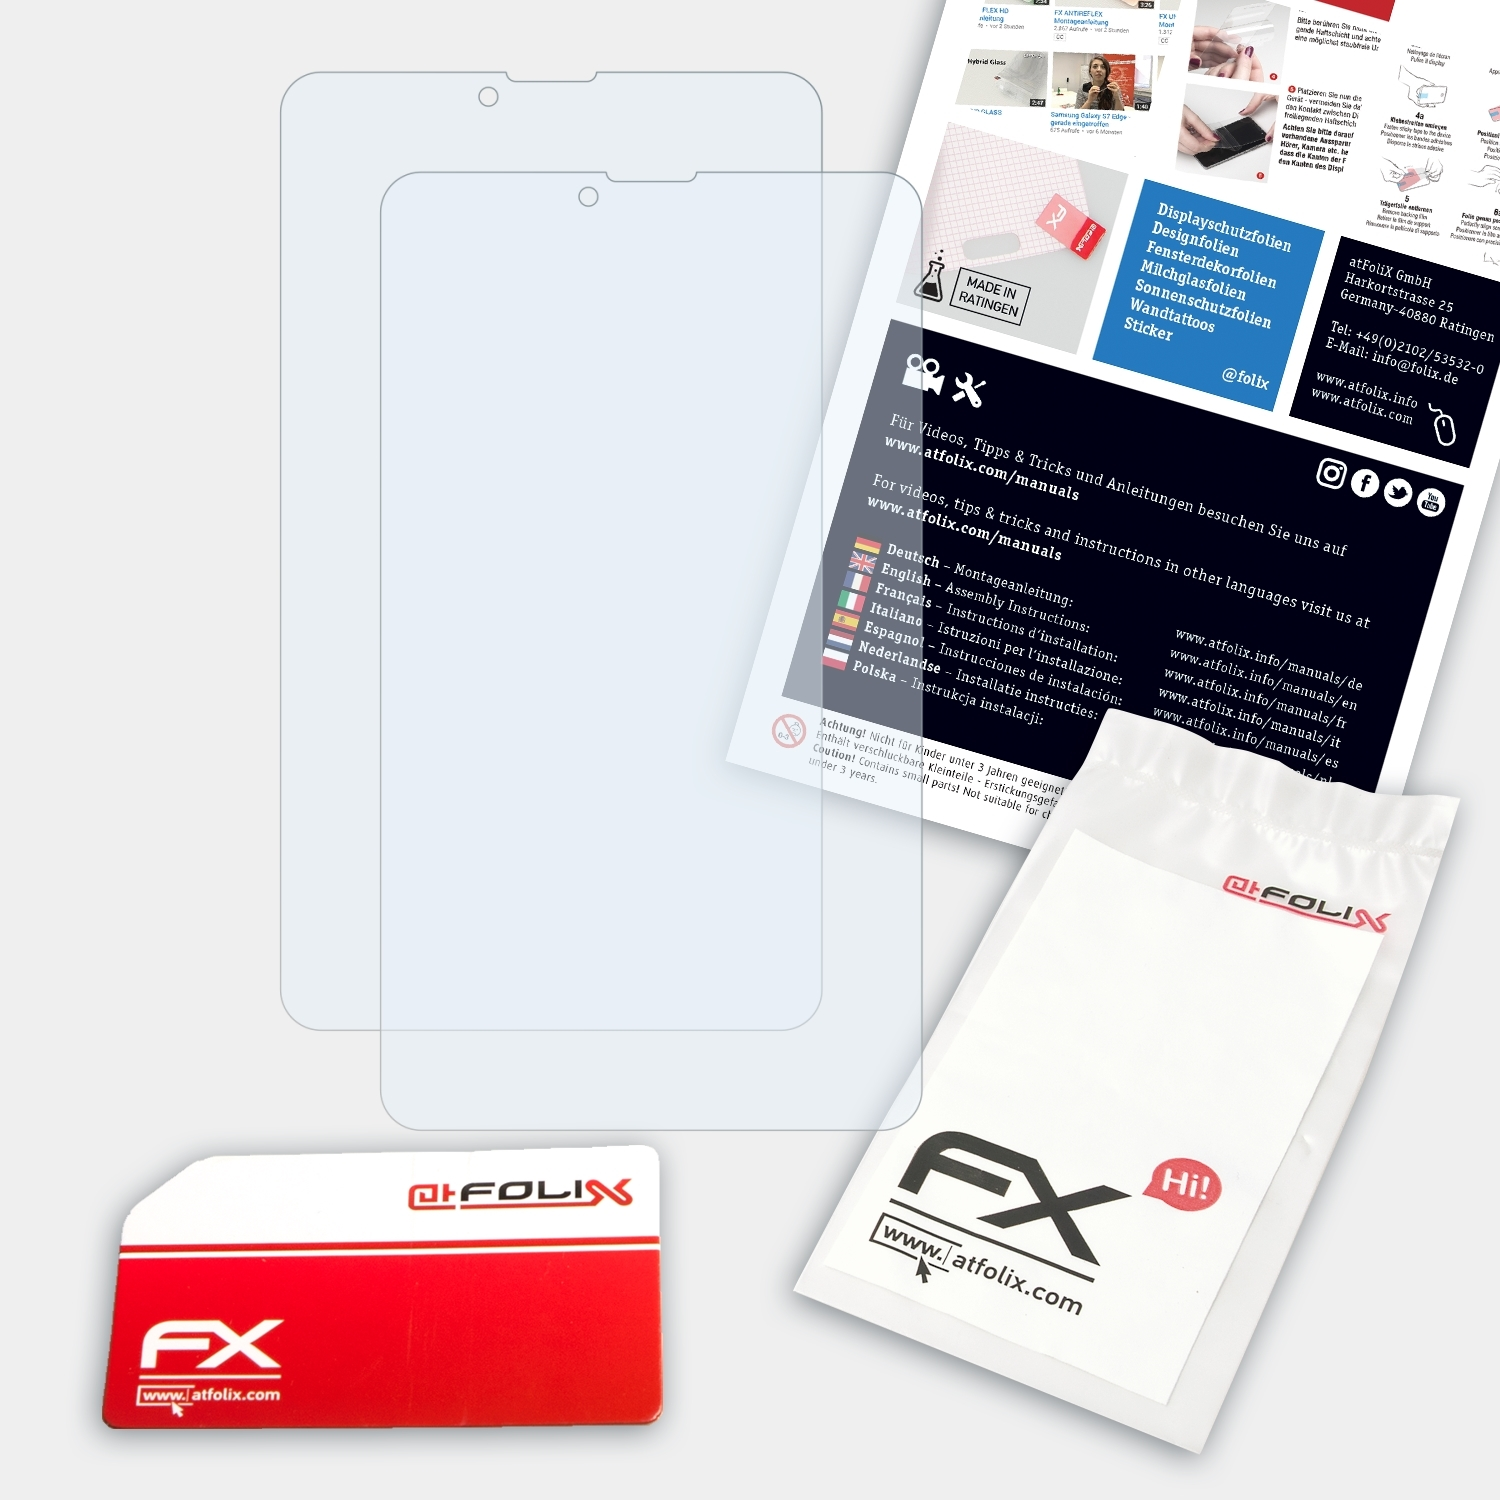 Tablet-PC FX-Clear JAY-tech 2x ATFOLIX Displayschutz(für XTE7D)